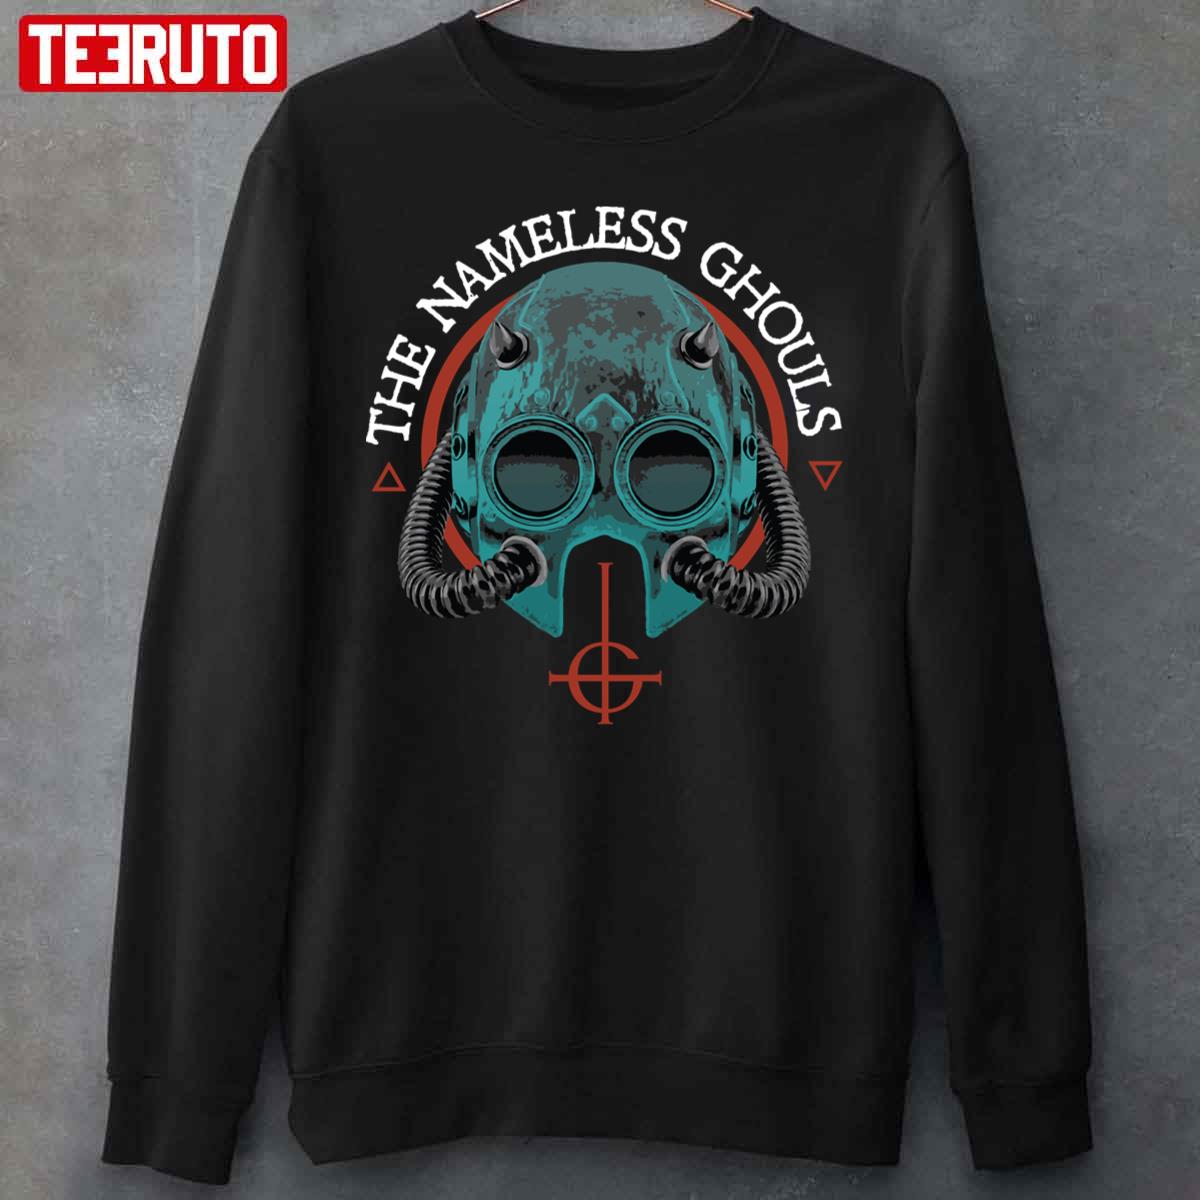 The Nameless Ghouls Unisex Sweatshirt